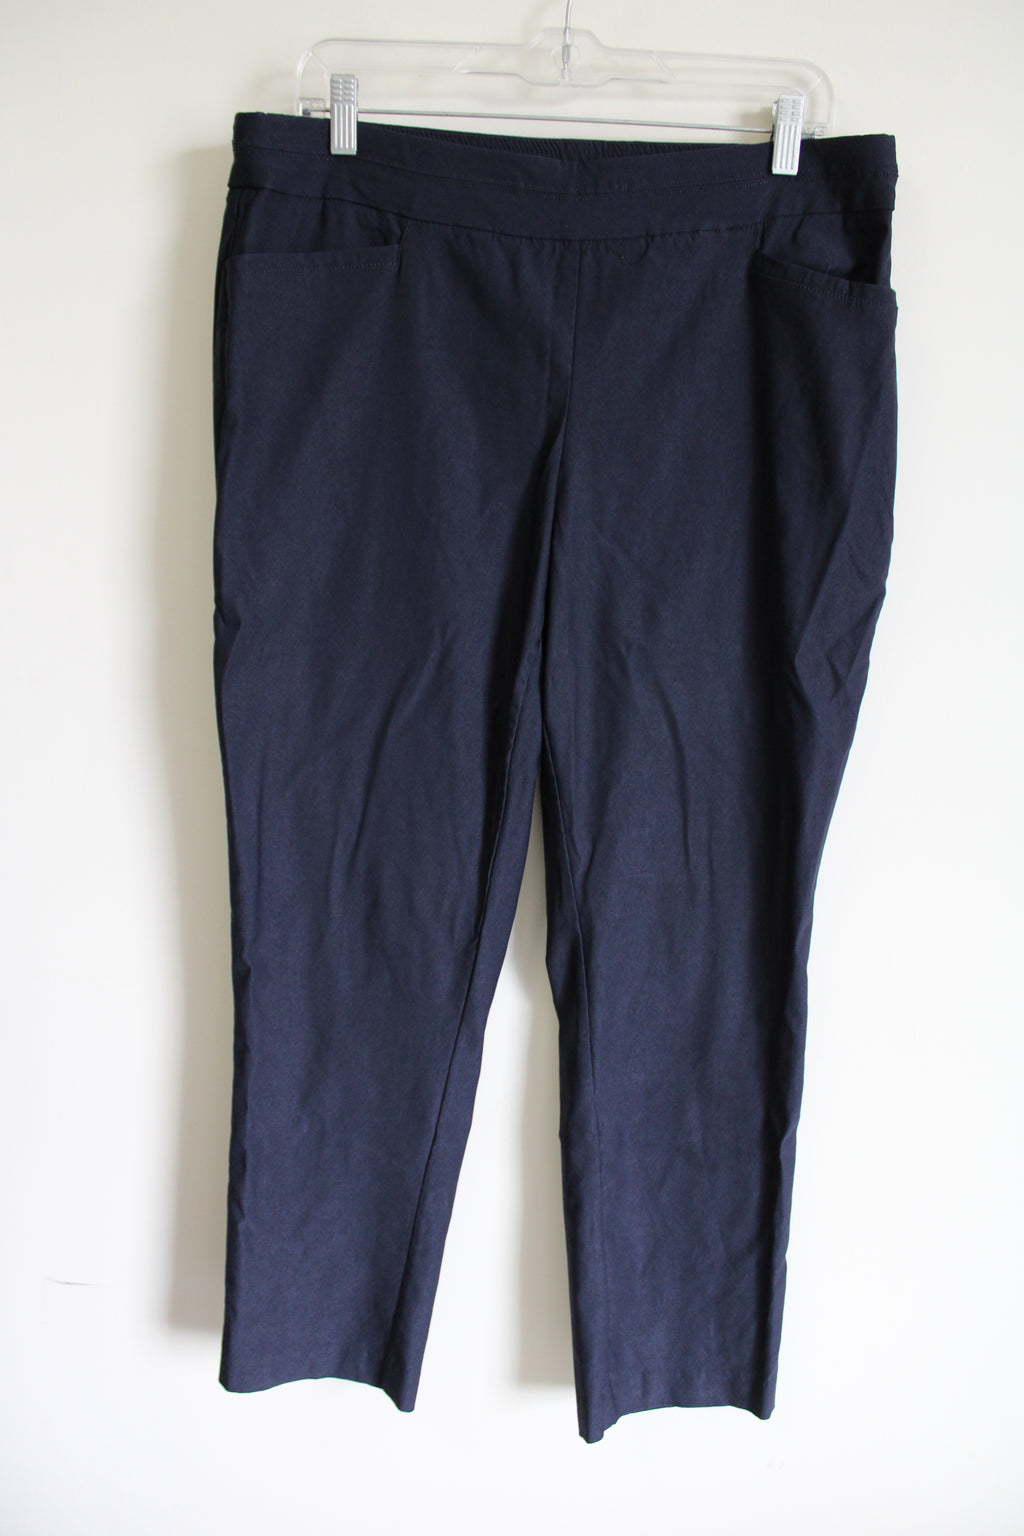 Apt.9 Dark Navy Blue Stretch Chino Pants | 16 Petite